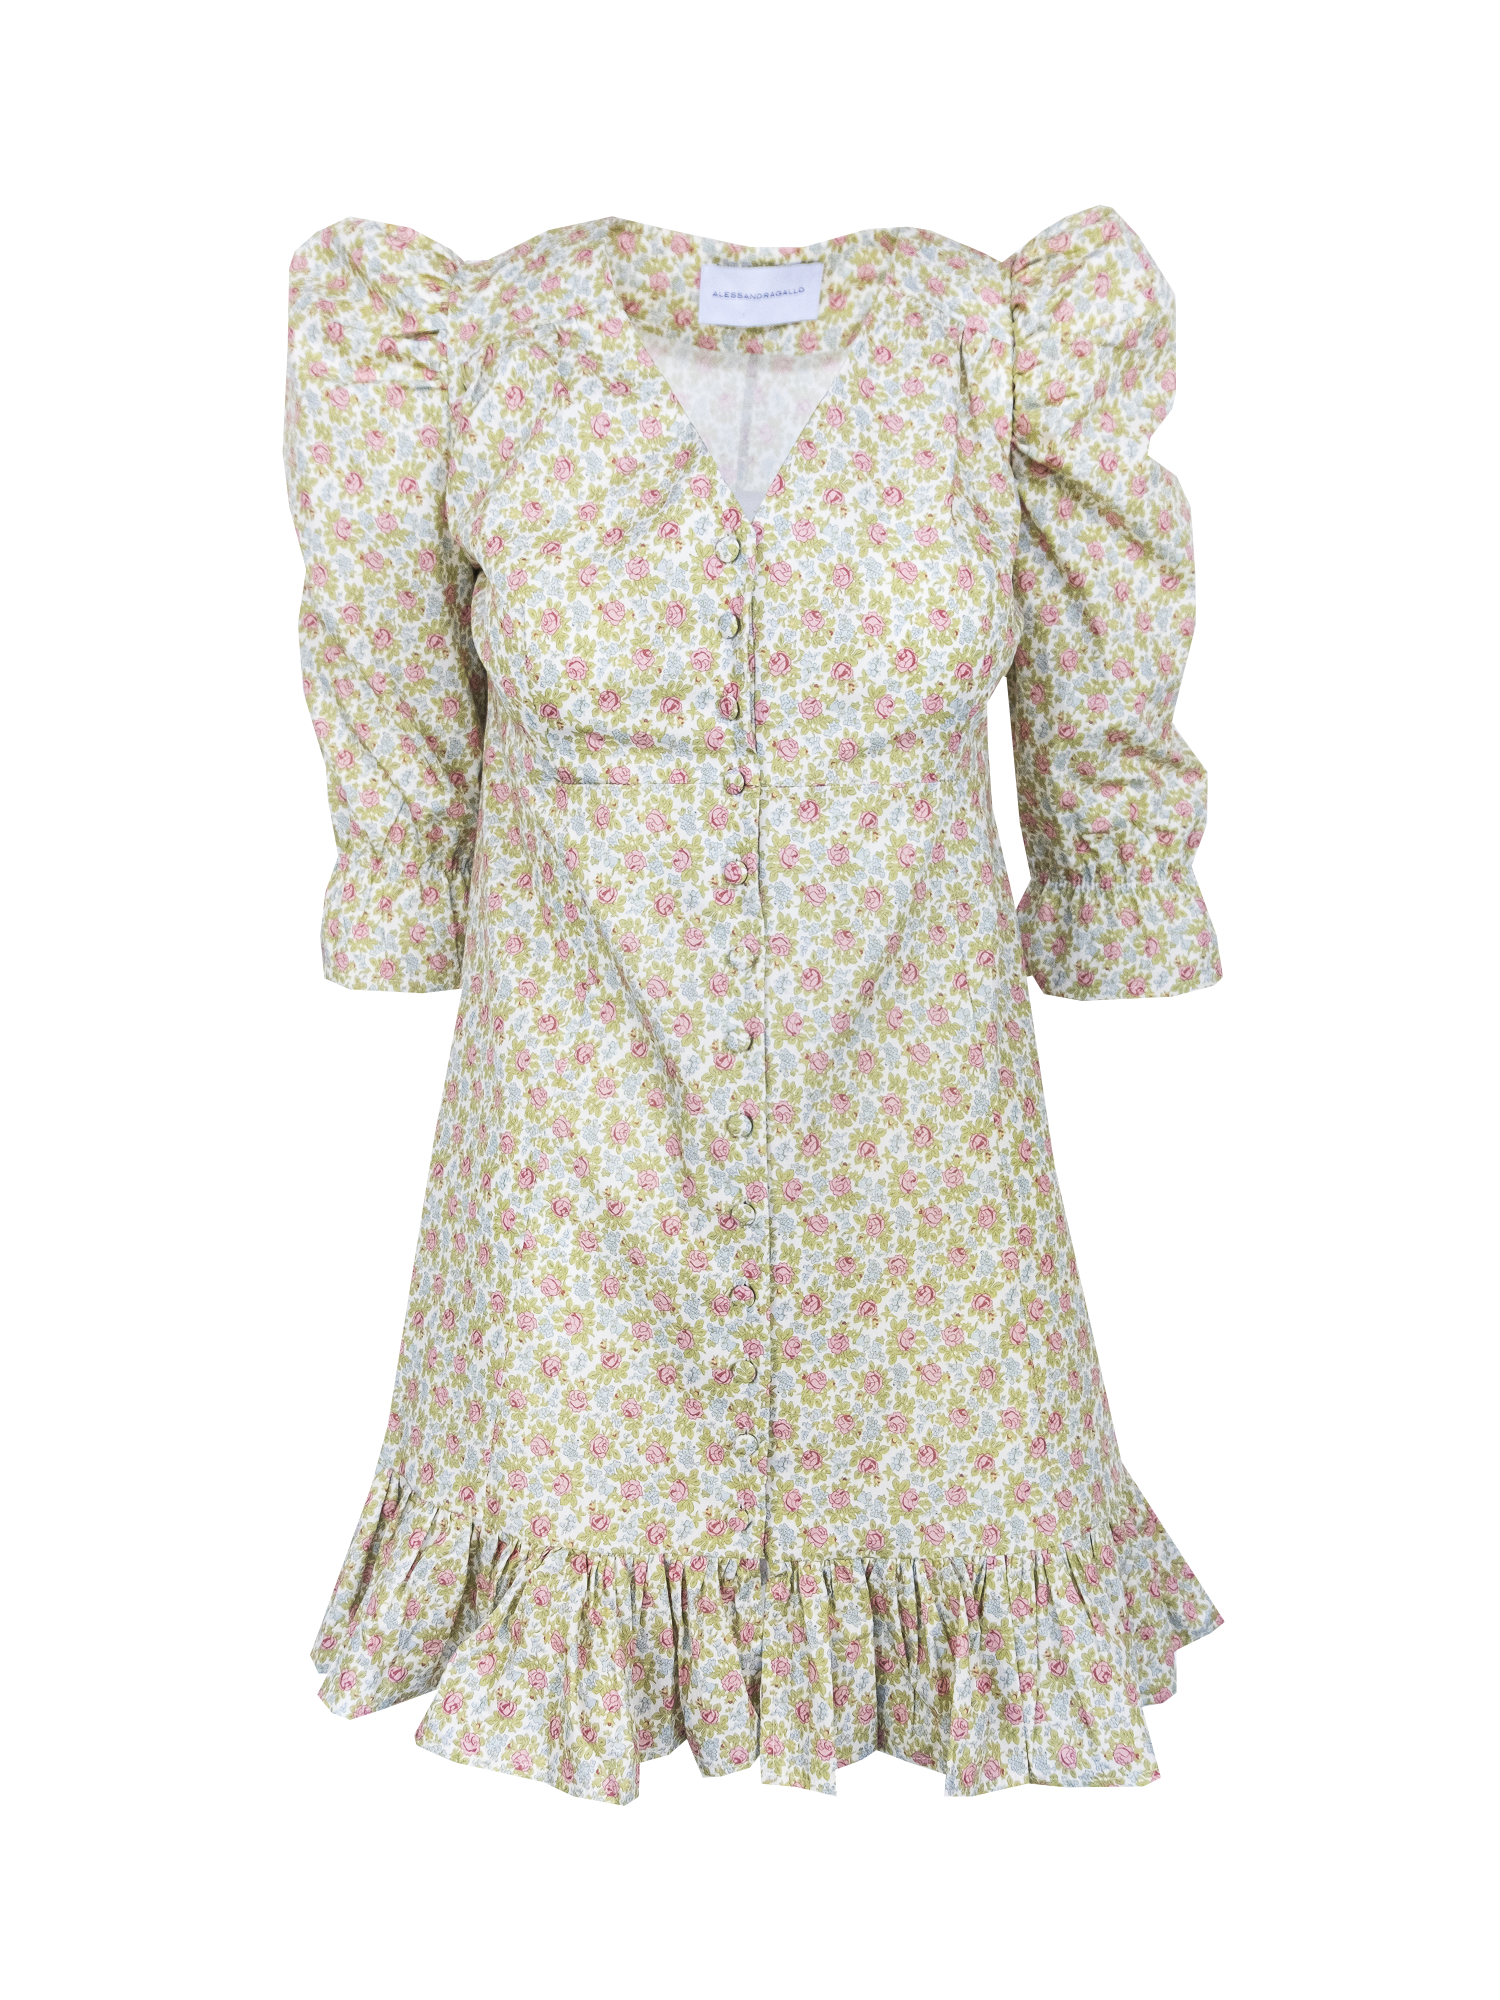 DALIA - short cotton dress with Ephrussi pattern